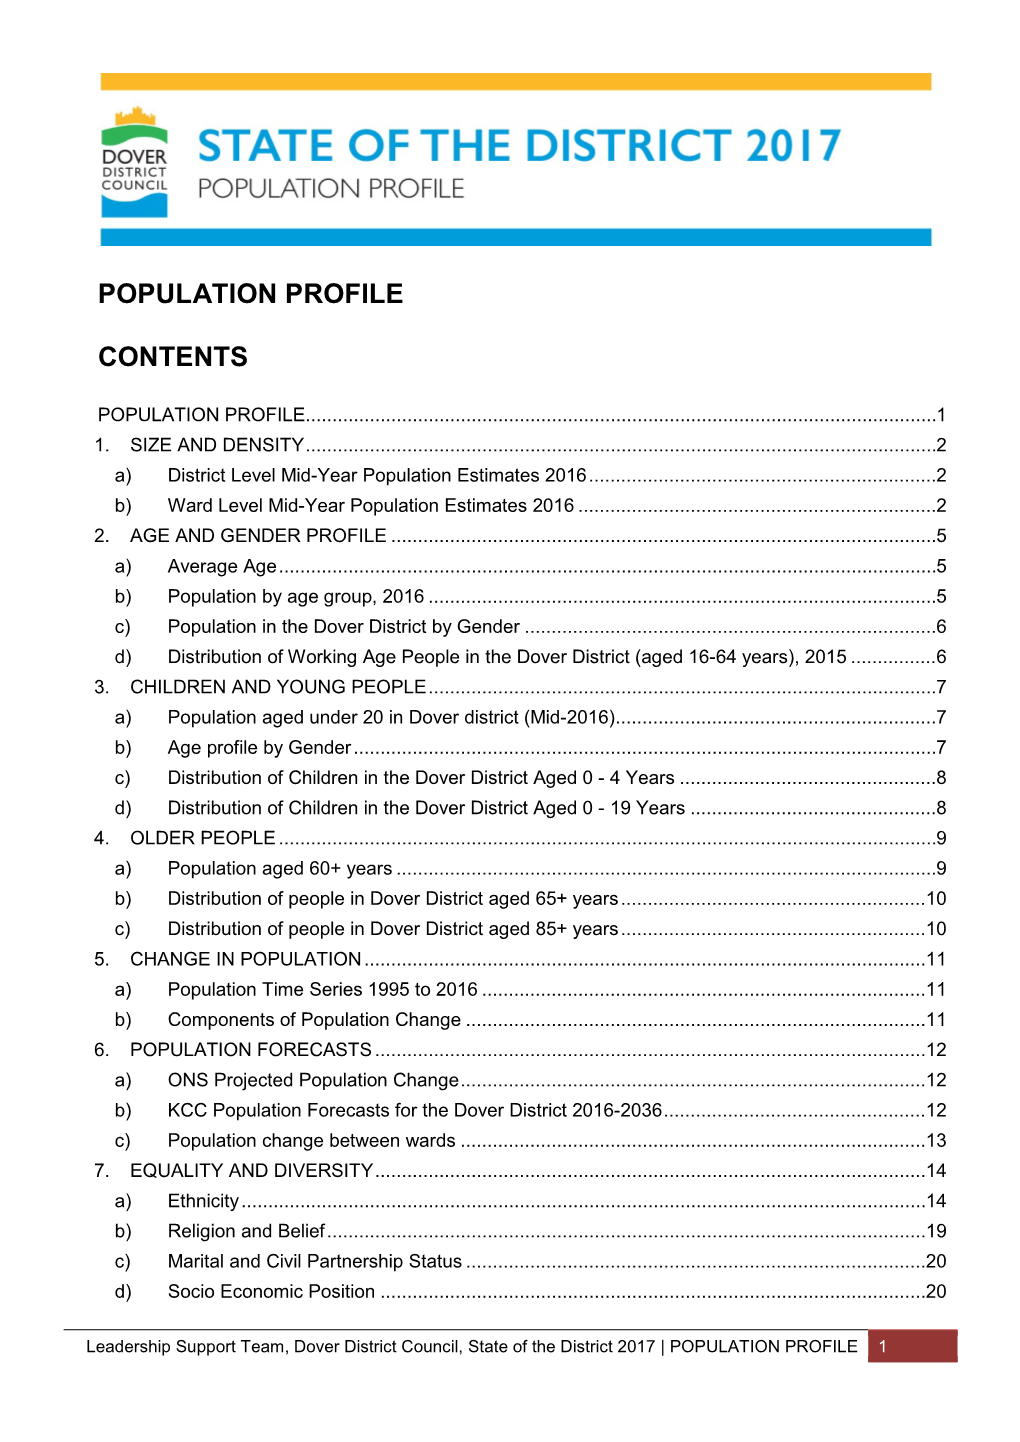 Population Profile Contents